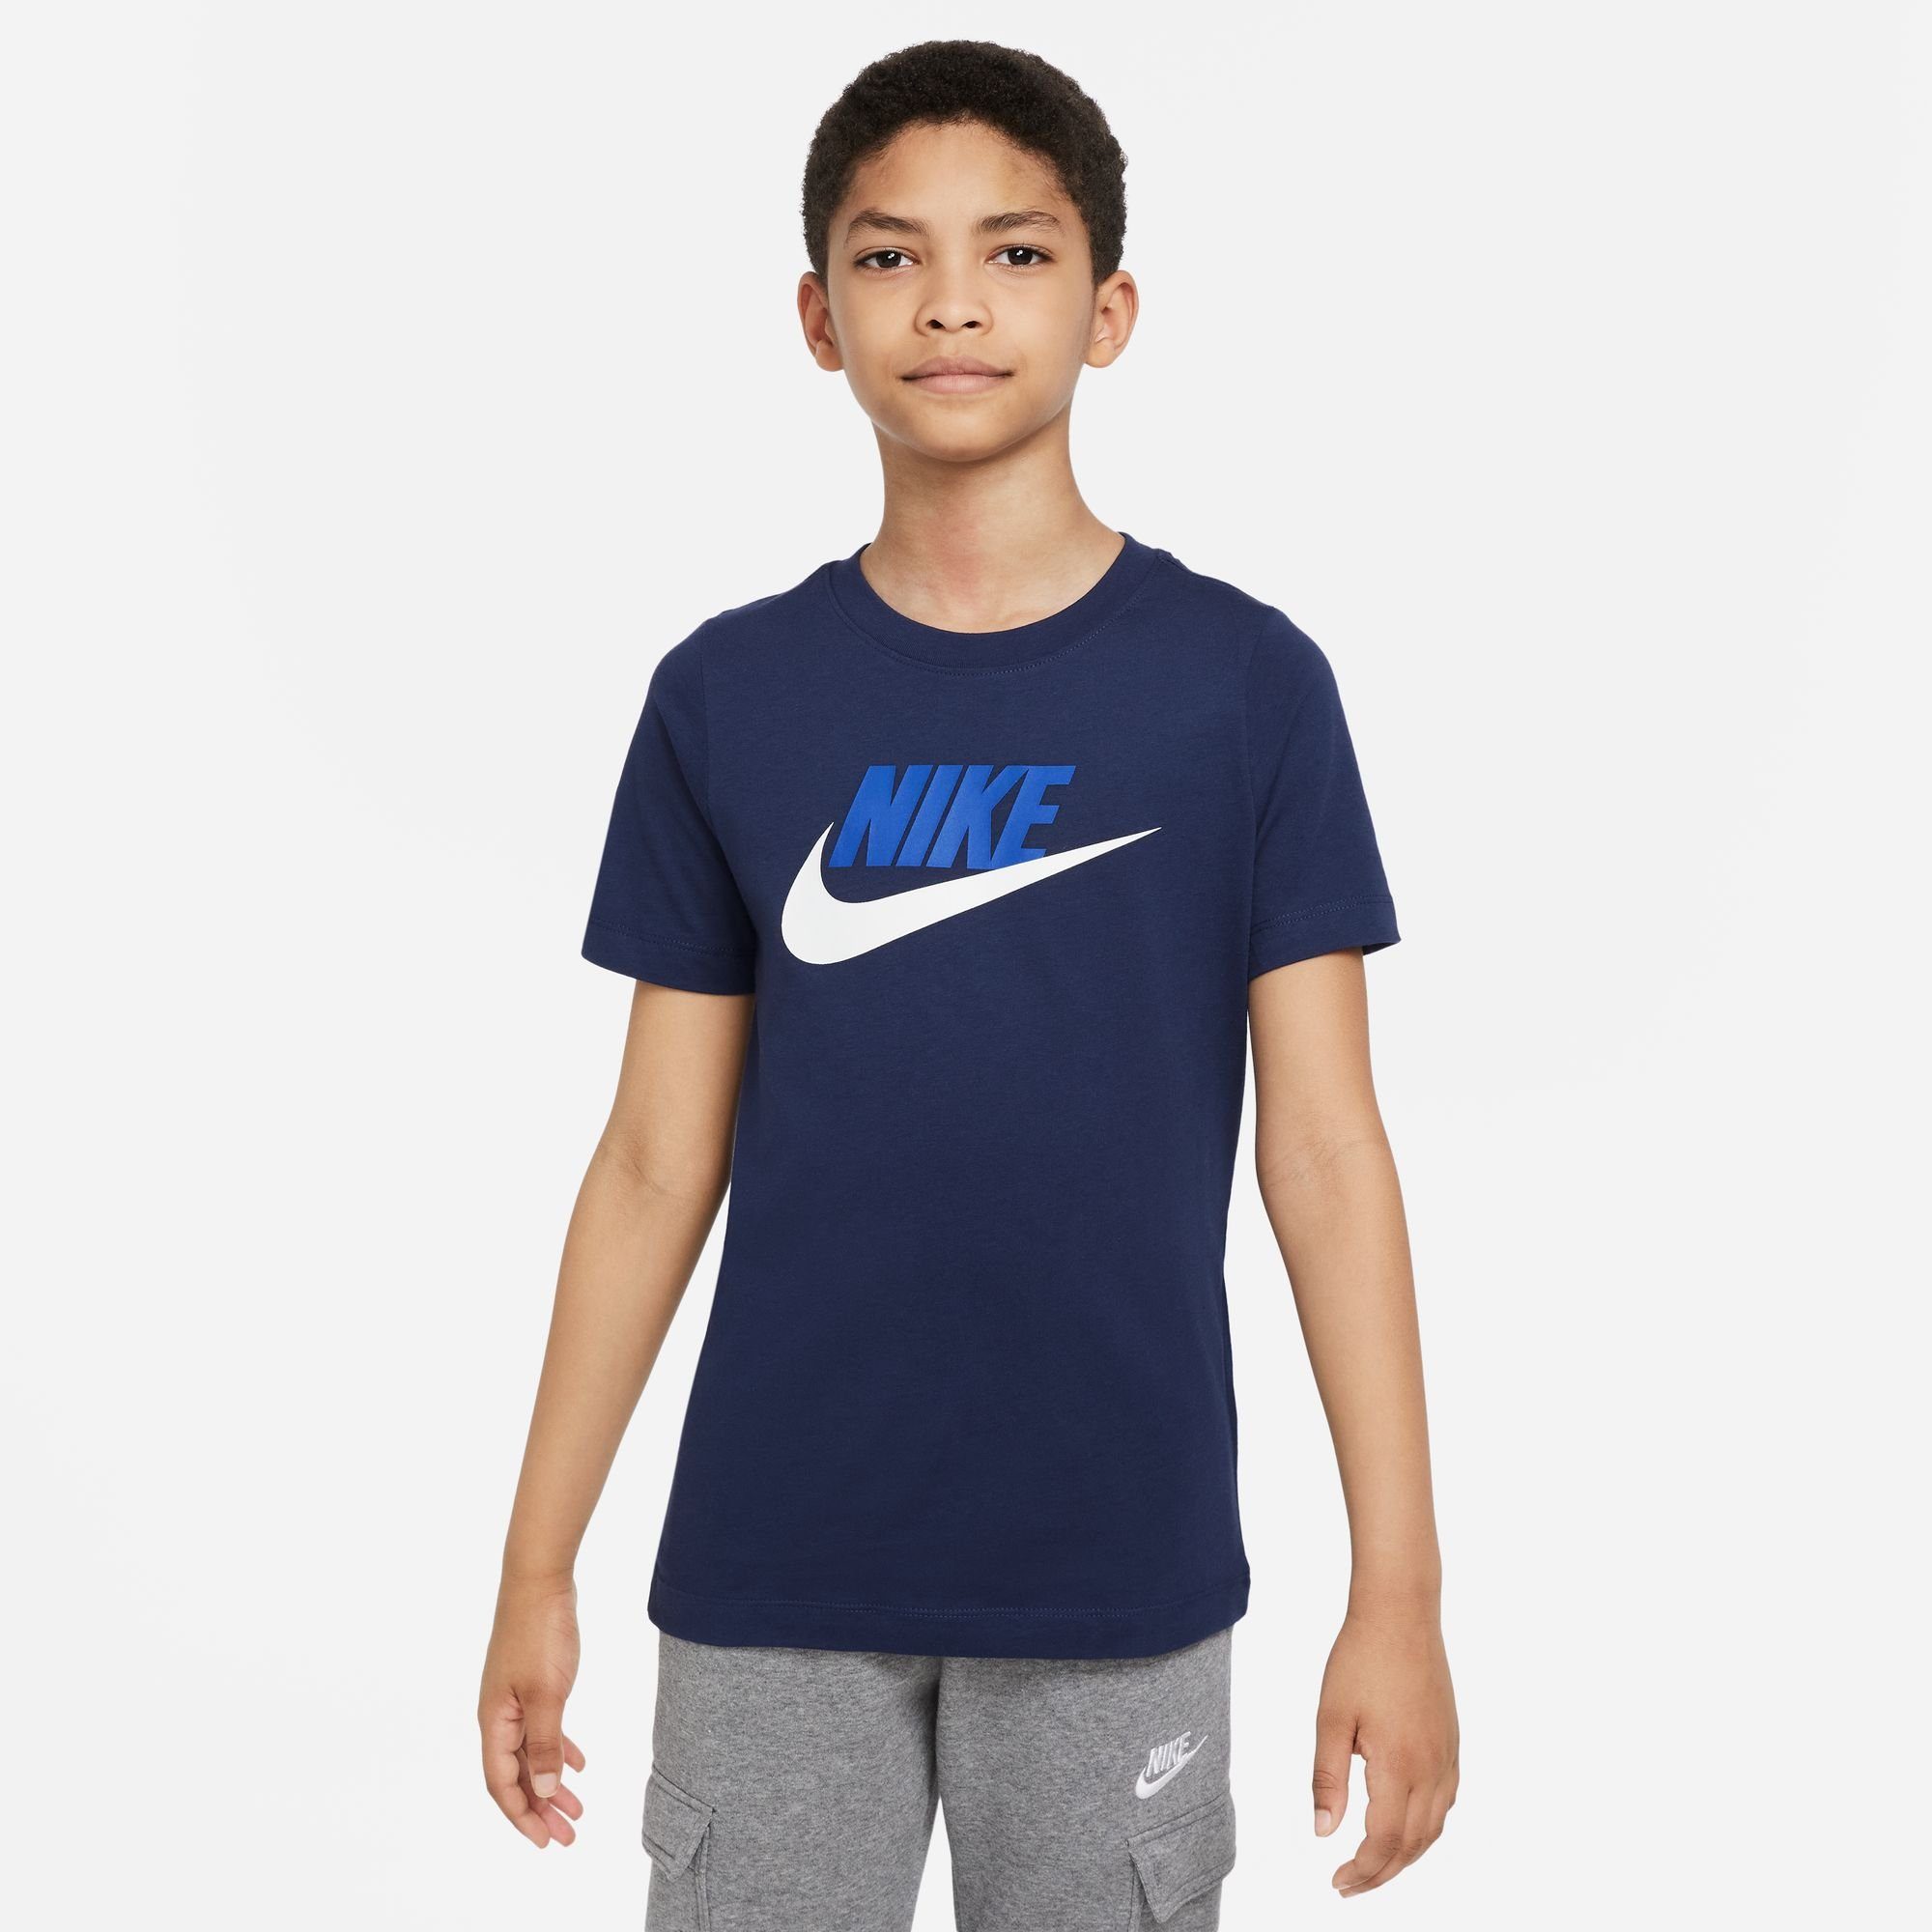 NAVY/WHITE BIG T-Shirt MIDNIGHT Sportswear T-SHIRT KIDS' Nike COTTON